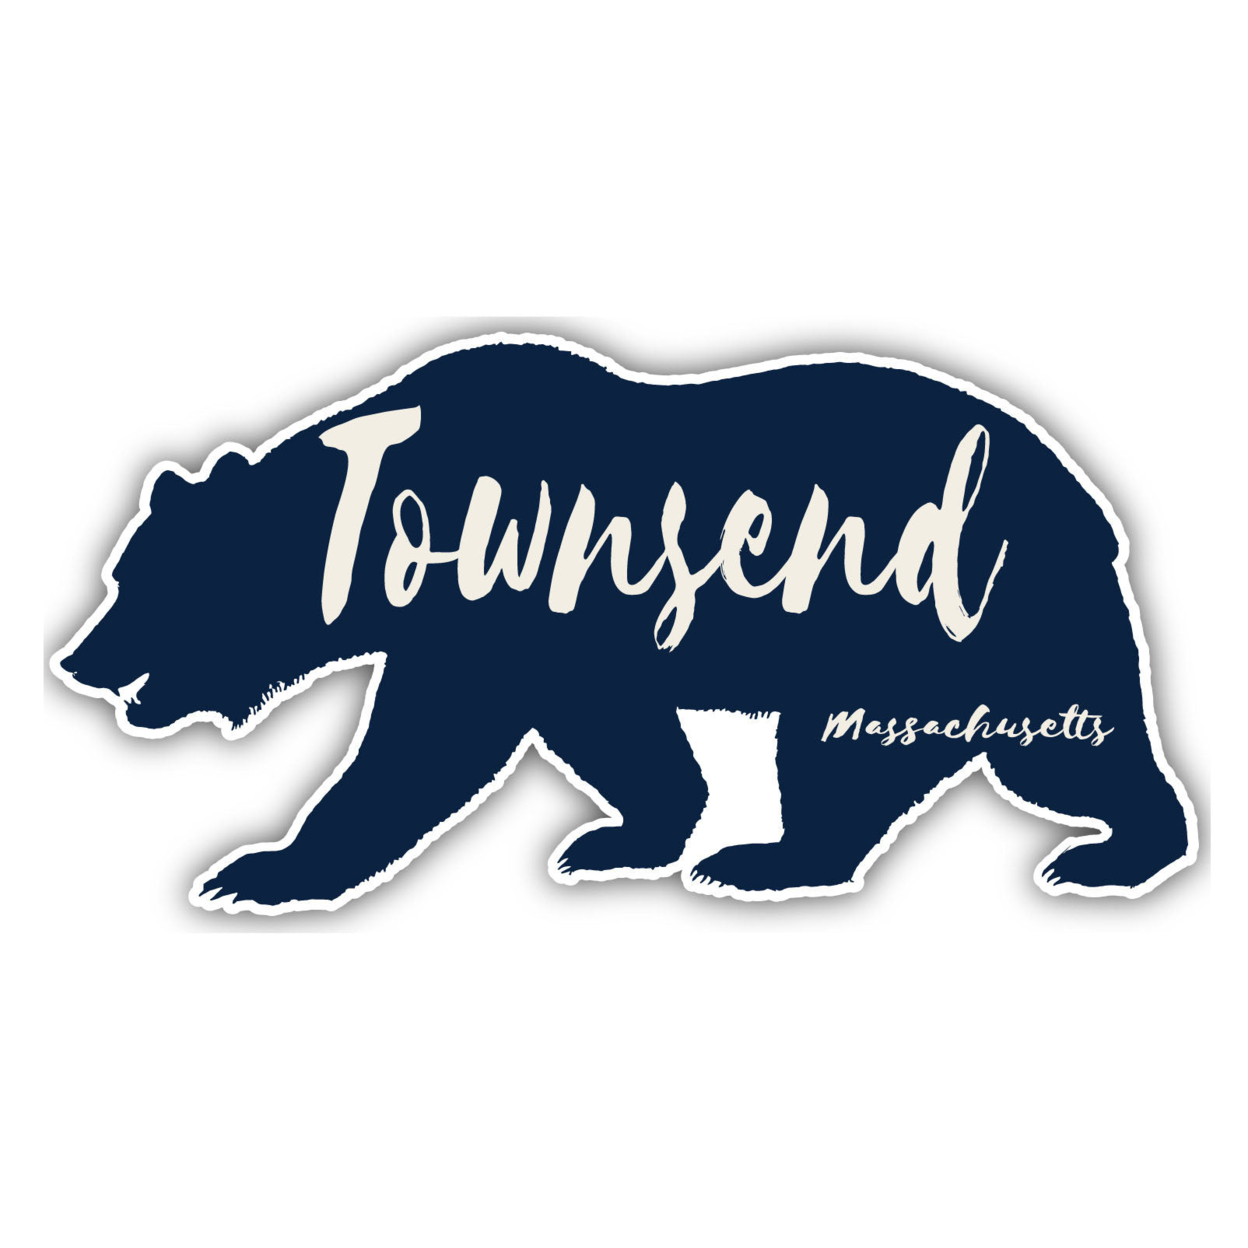 Townsend Massachusetts Souvenir Decorative Stickers (Choose Theme And Size) - Single Unit, 4-Inch, Bear